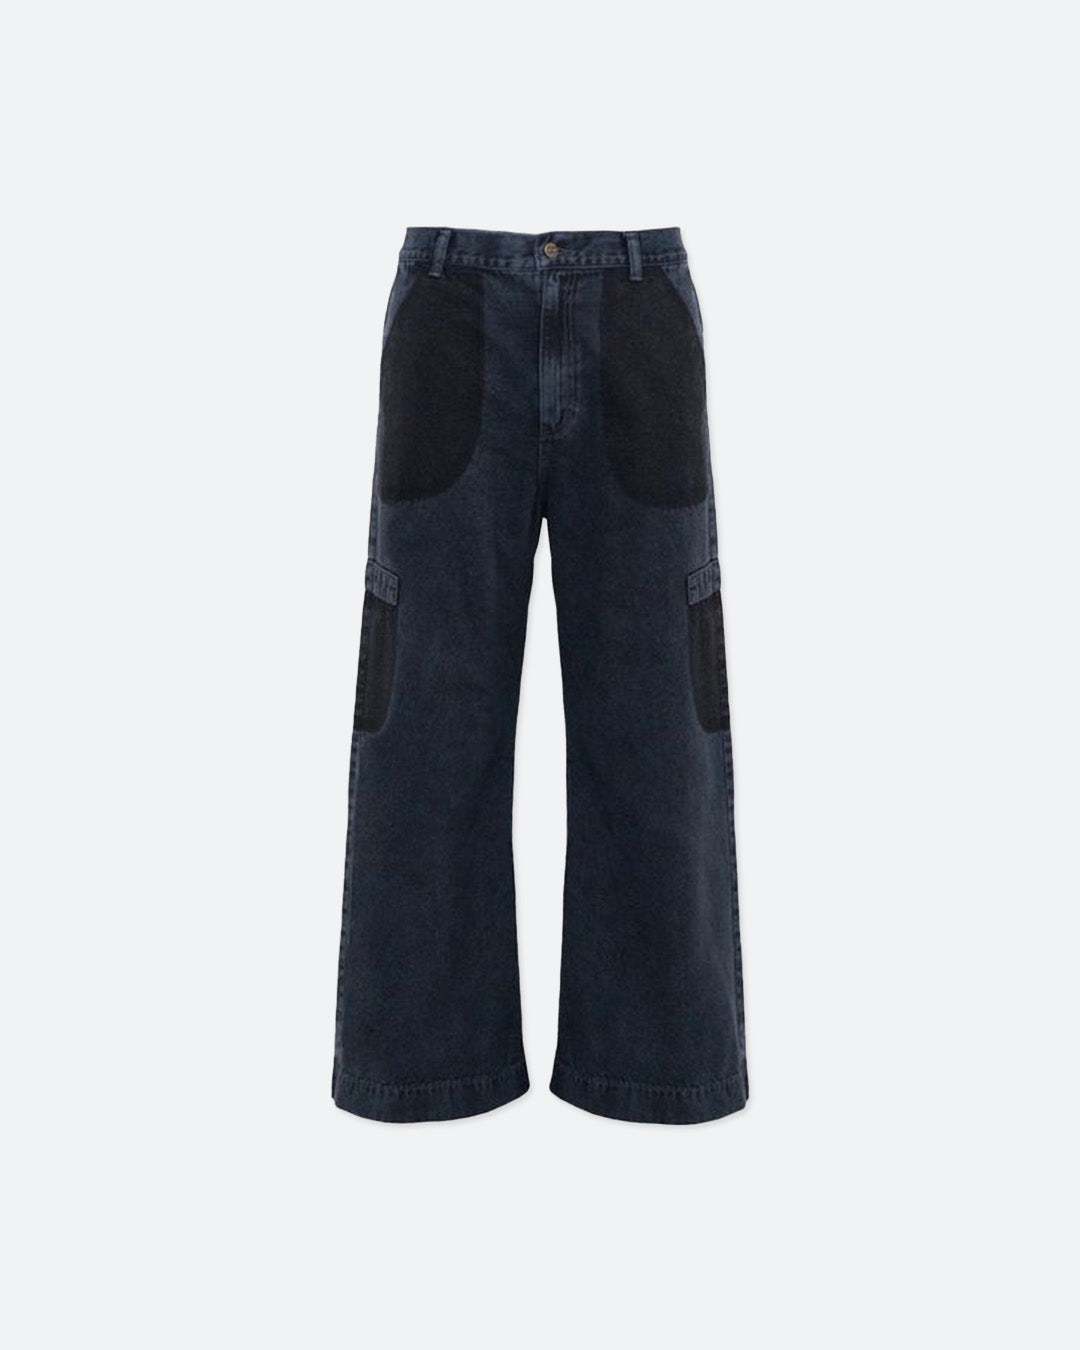 Anton Chlorine Navy Jeans